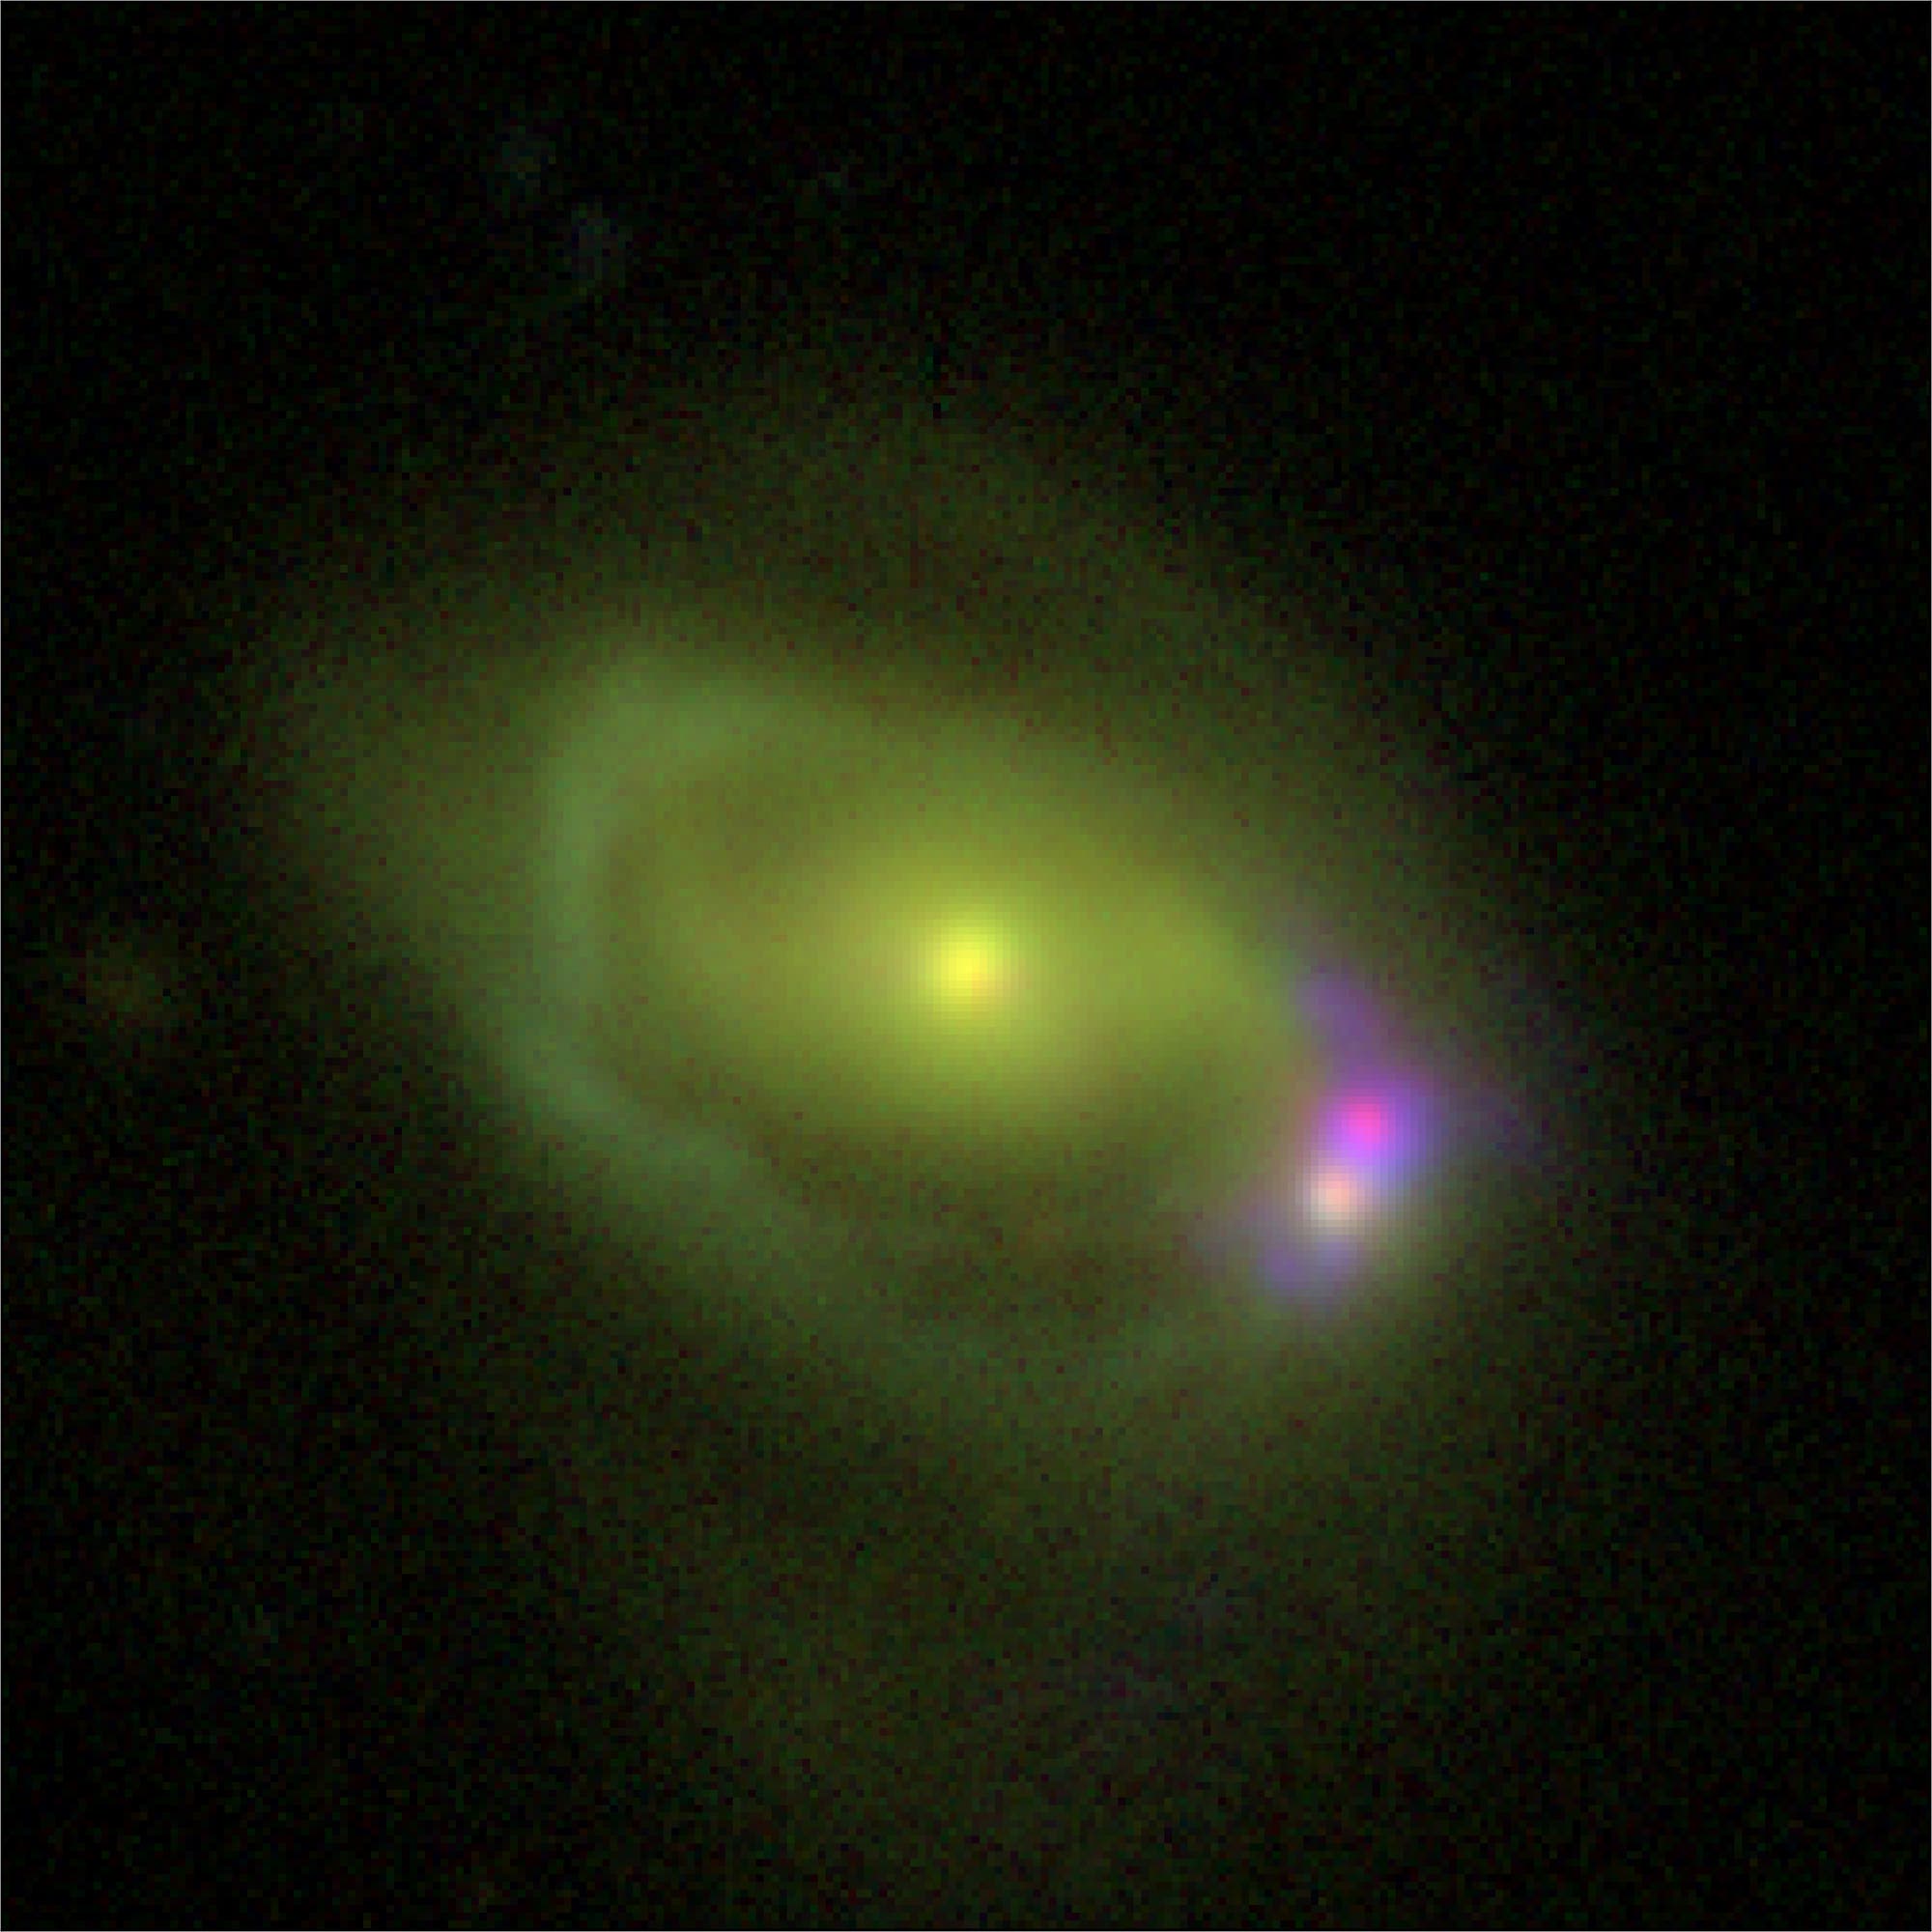 Verschmelzung zweier Galaxien (Falschfarbenaufnahme)